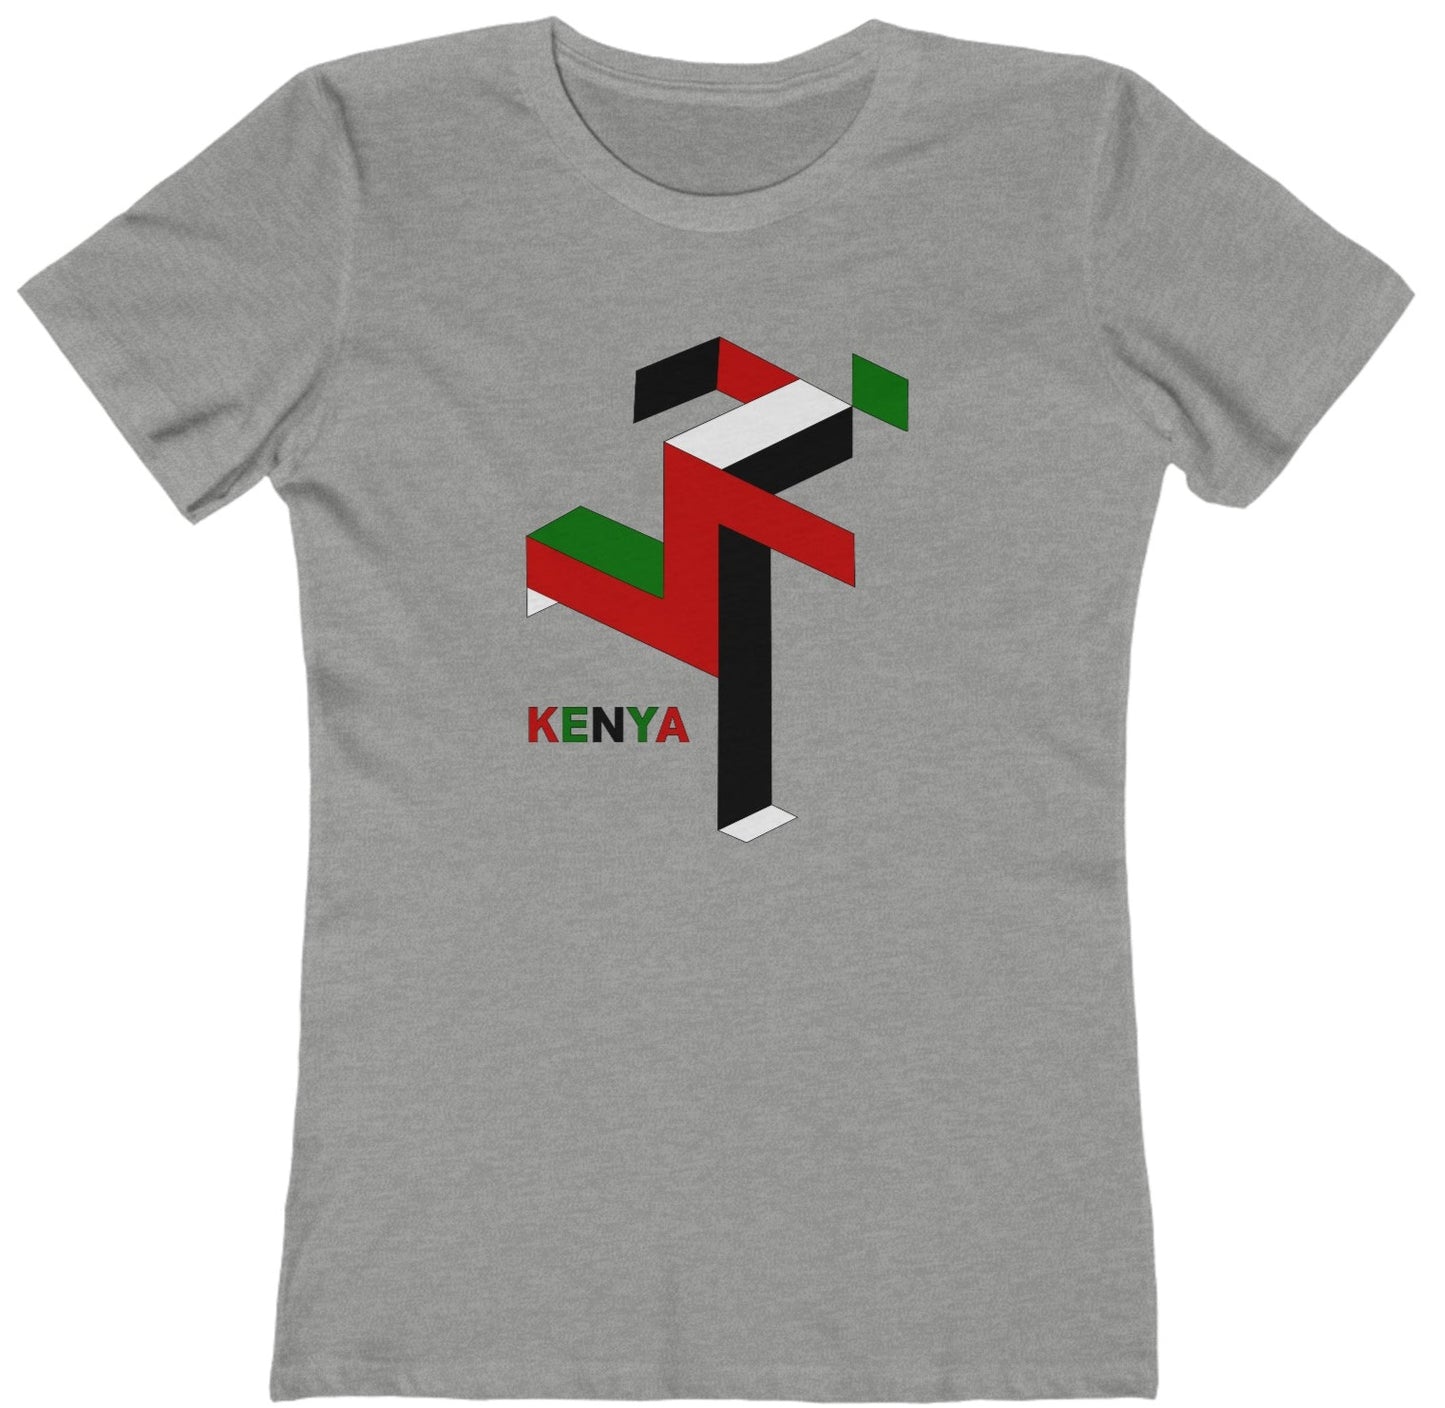 Kenya runner Olympics t shirt